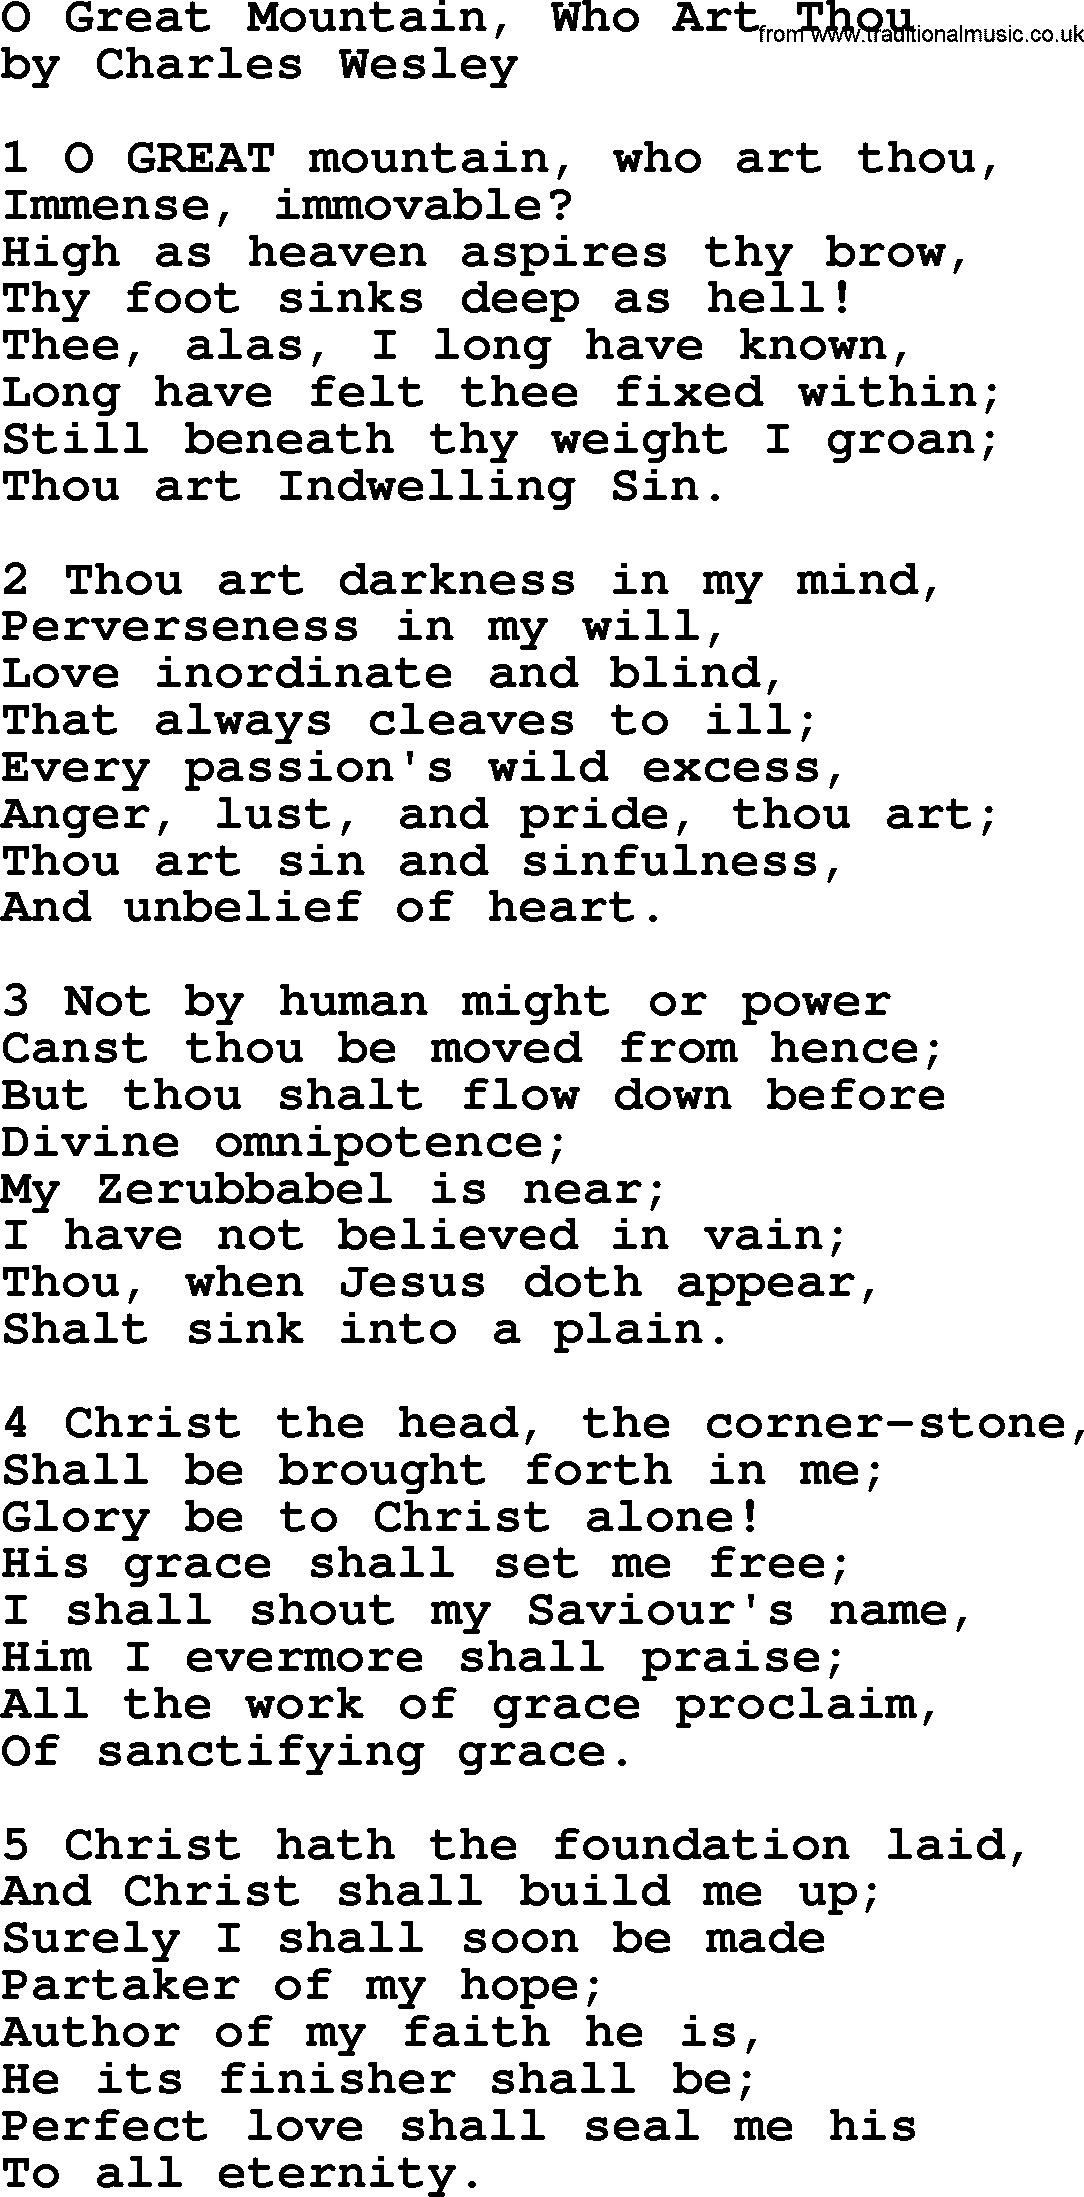 Charles Wesley hymn: O Great Mountain, Who Art Thou, lyrics